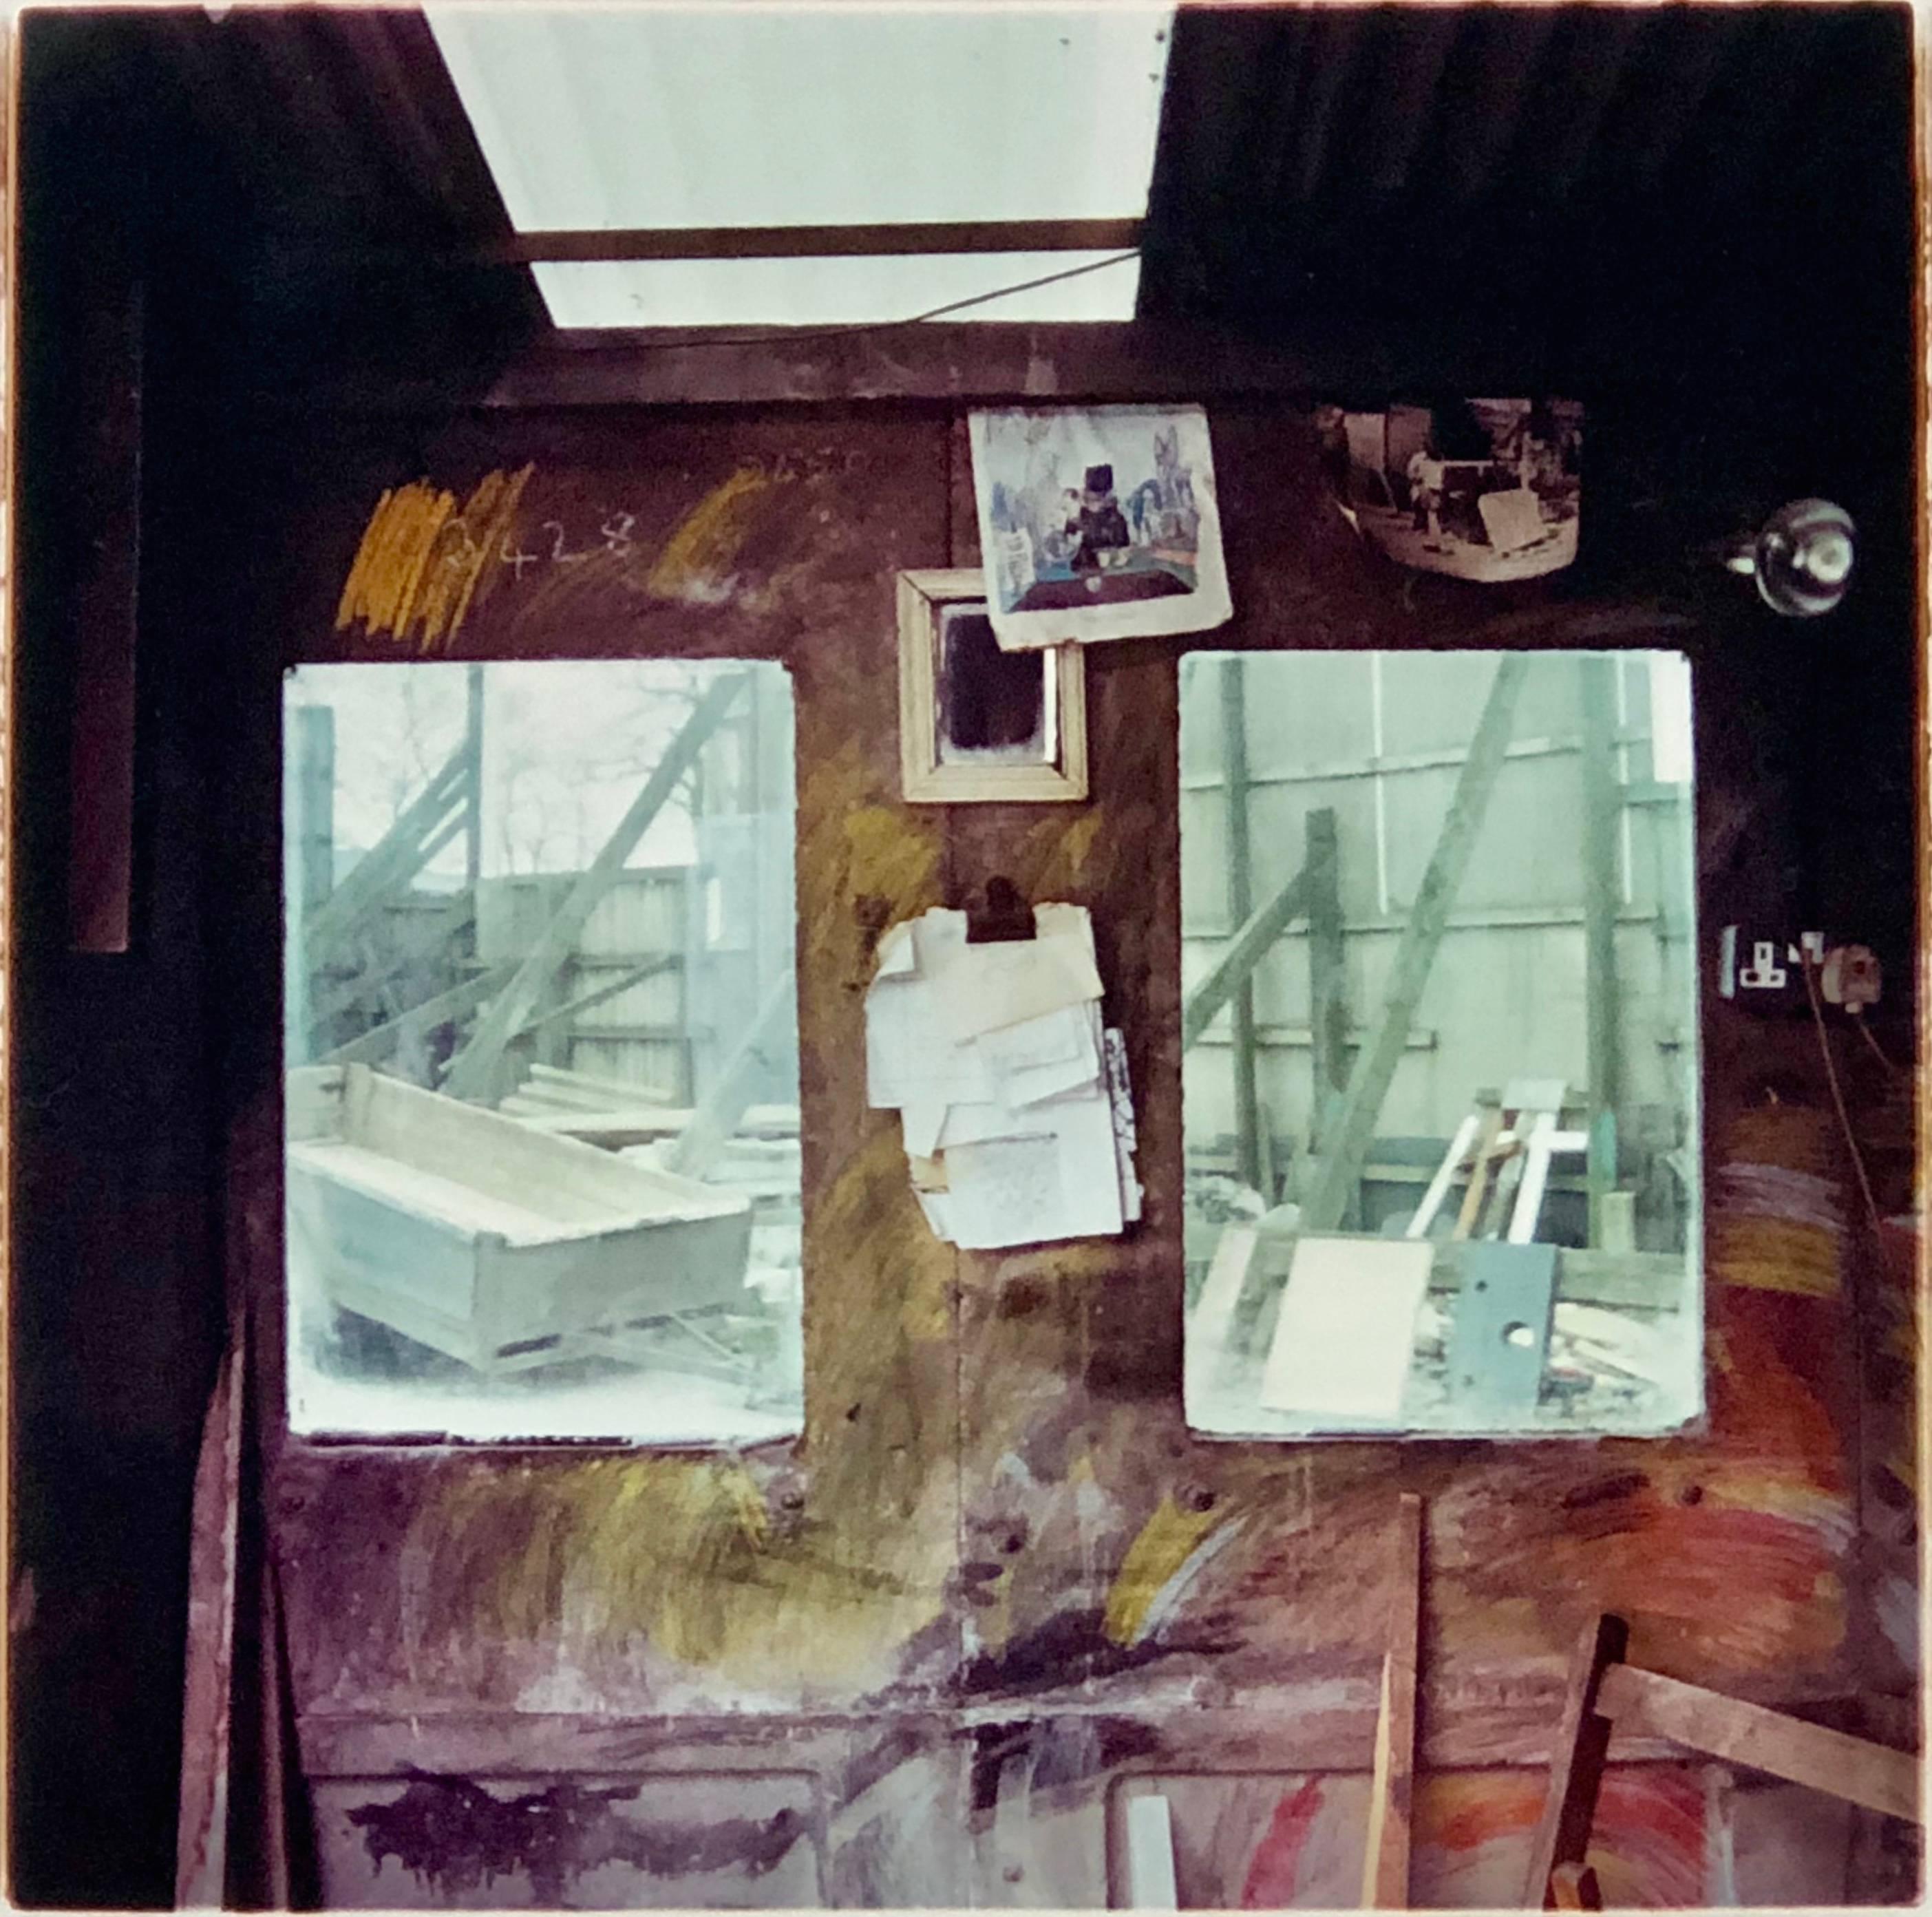 Stonemason's Workshop, Northwich - British industrial interior color photography